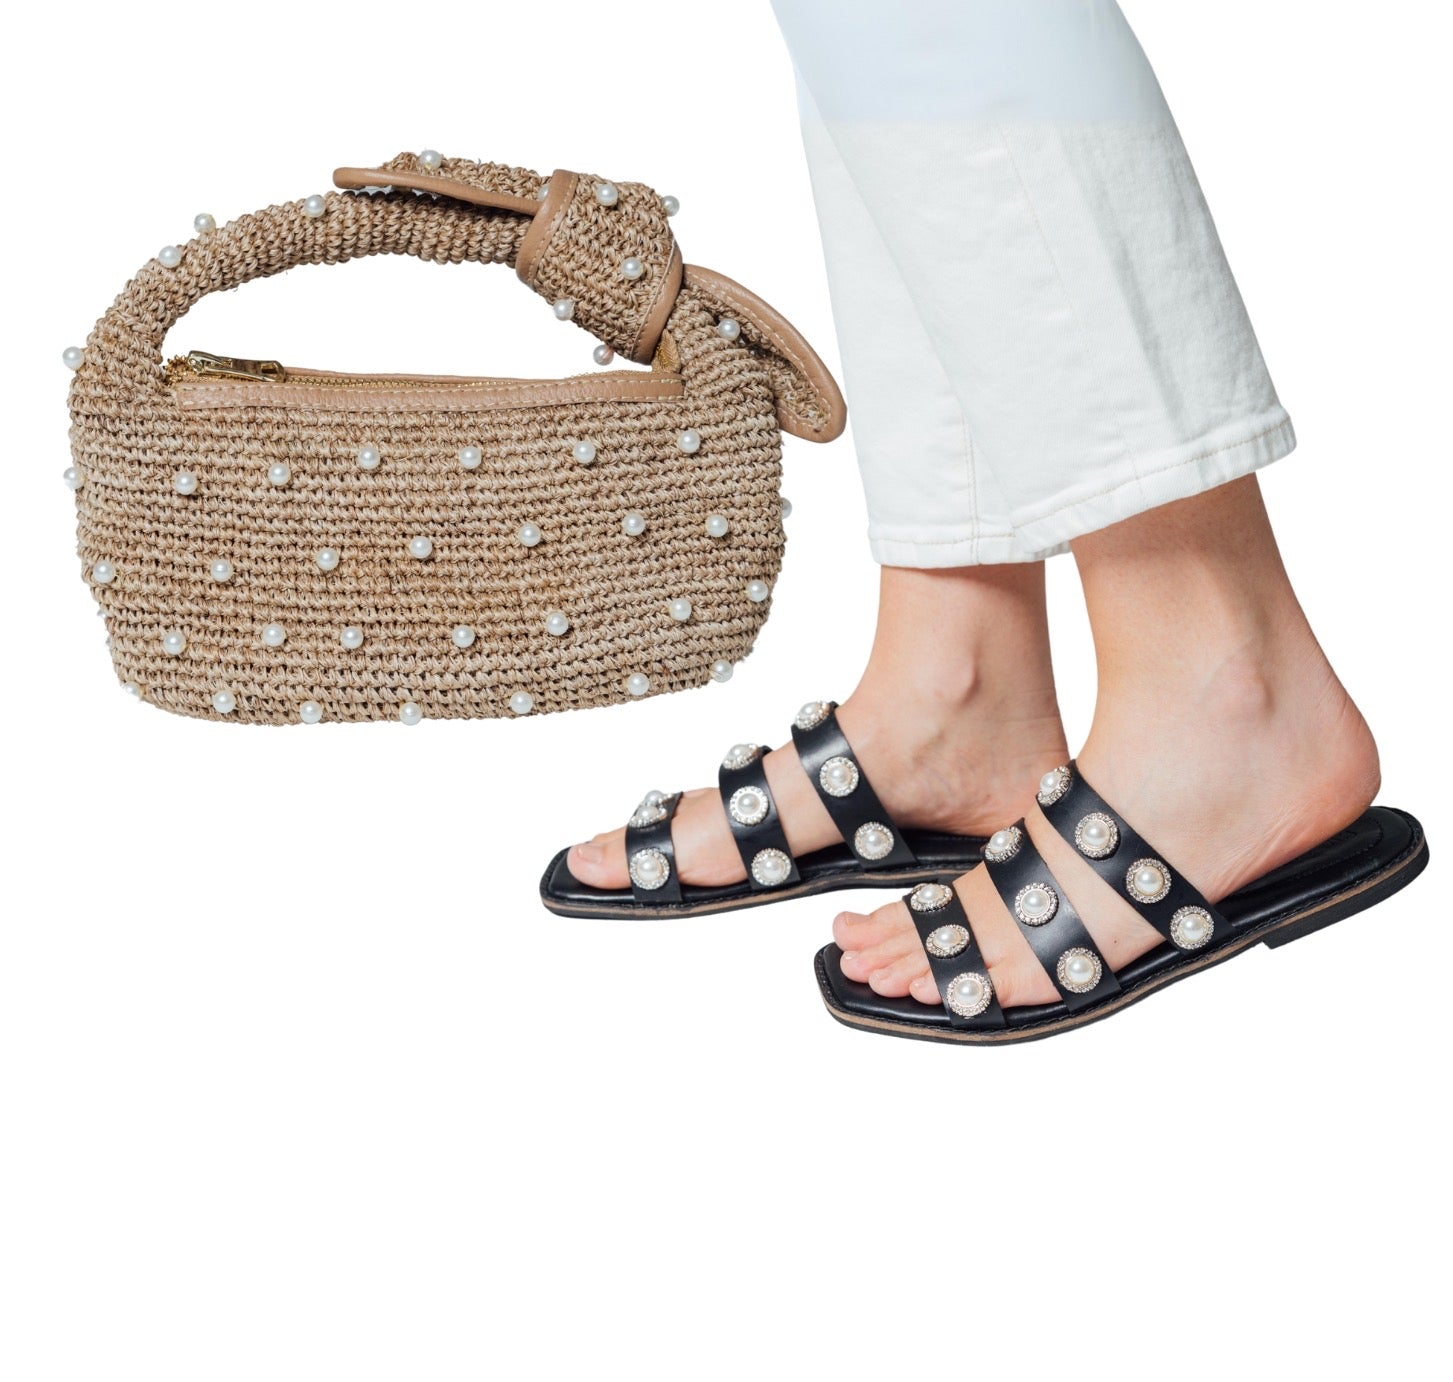 Perla Bag + Perla Sandals Negras